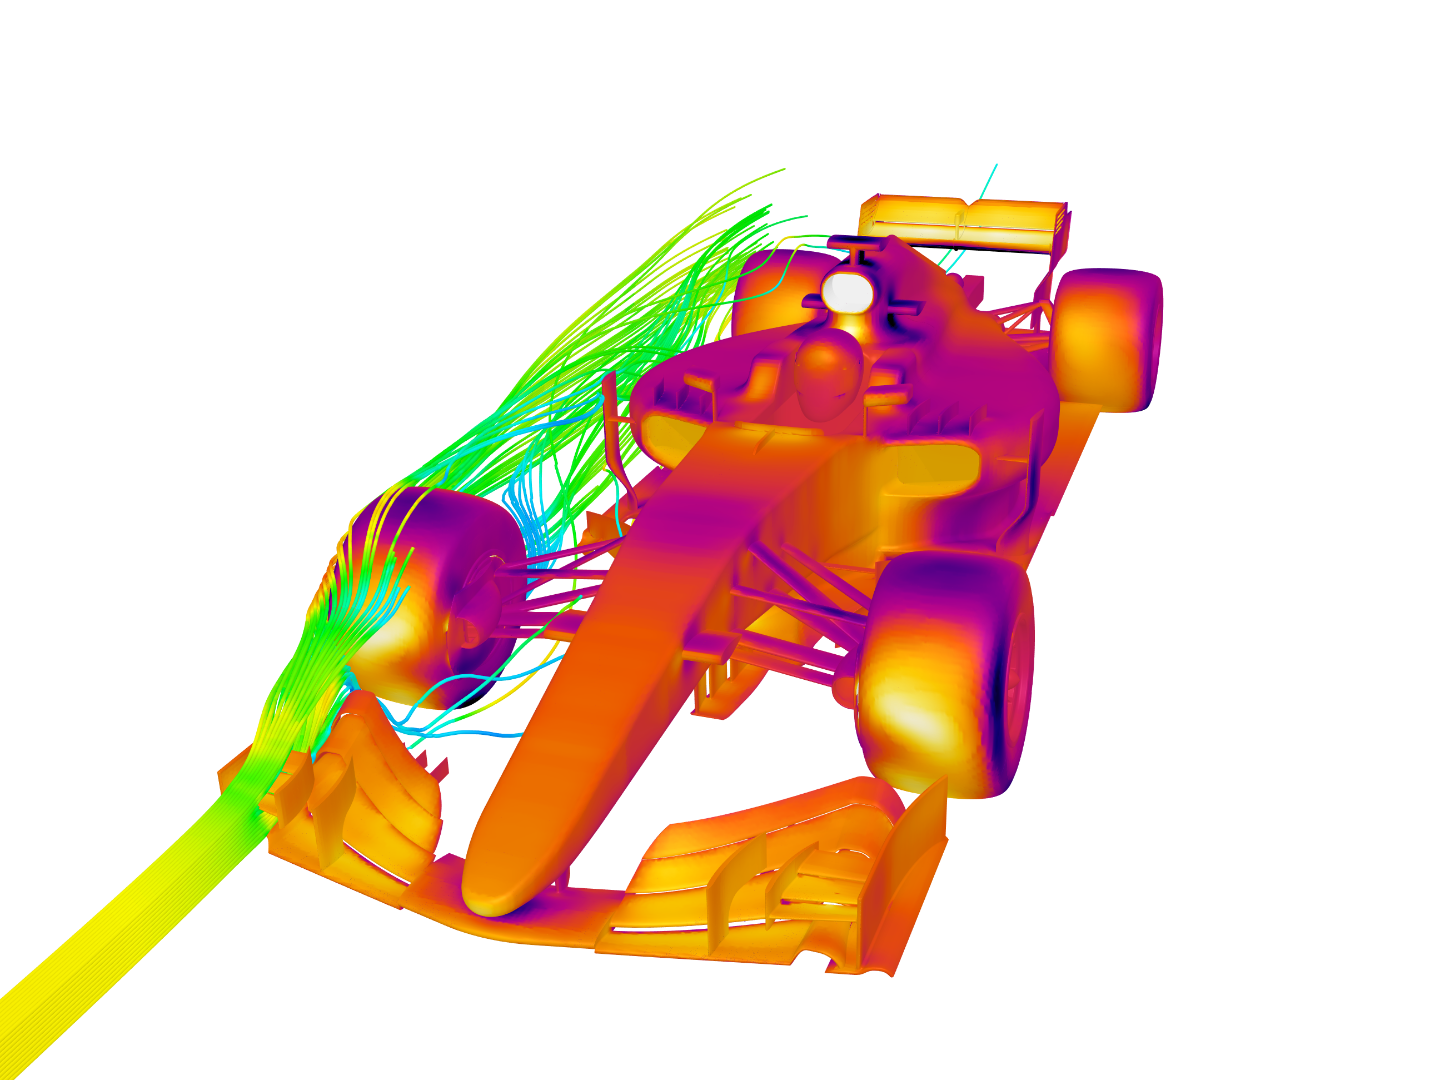 f1 car first sim image